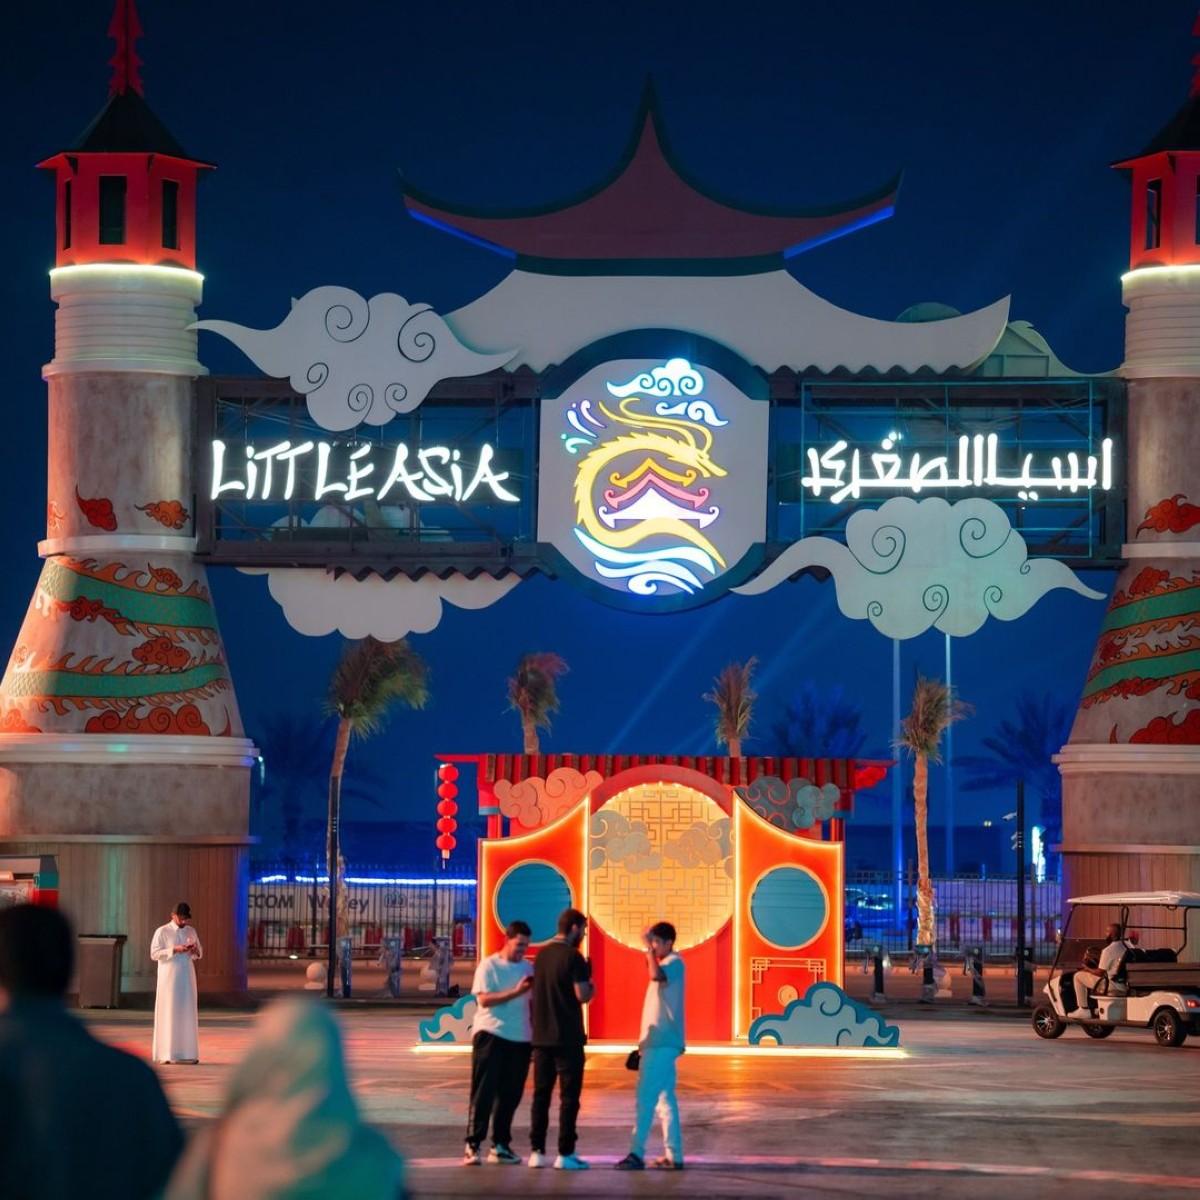 Little Asia: A taste of the Far East in Jeddah